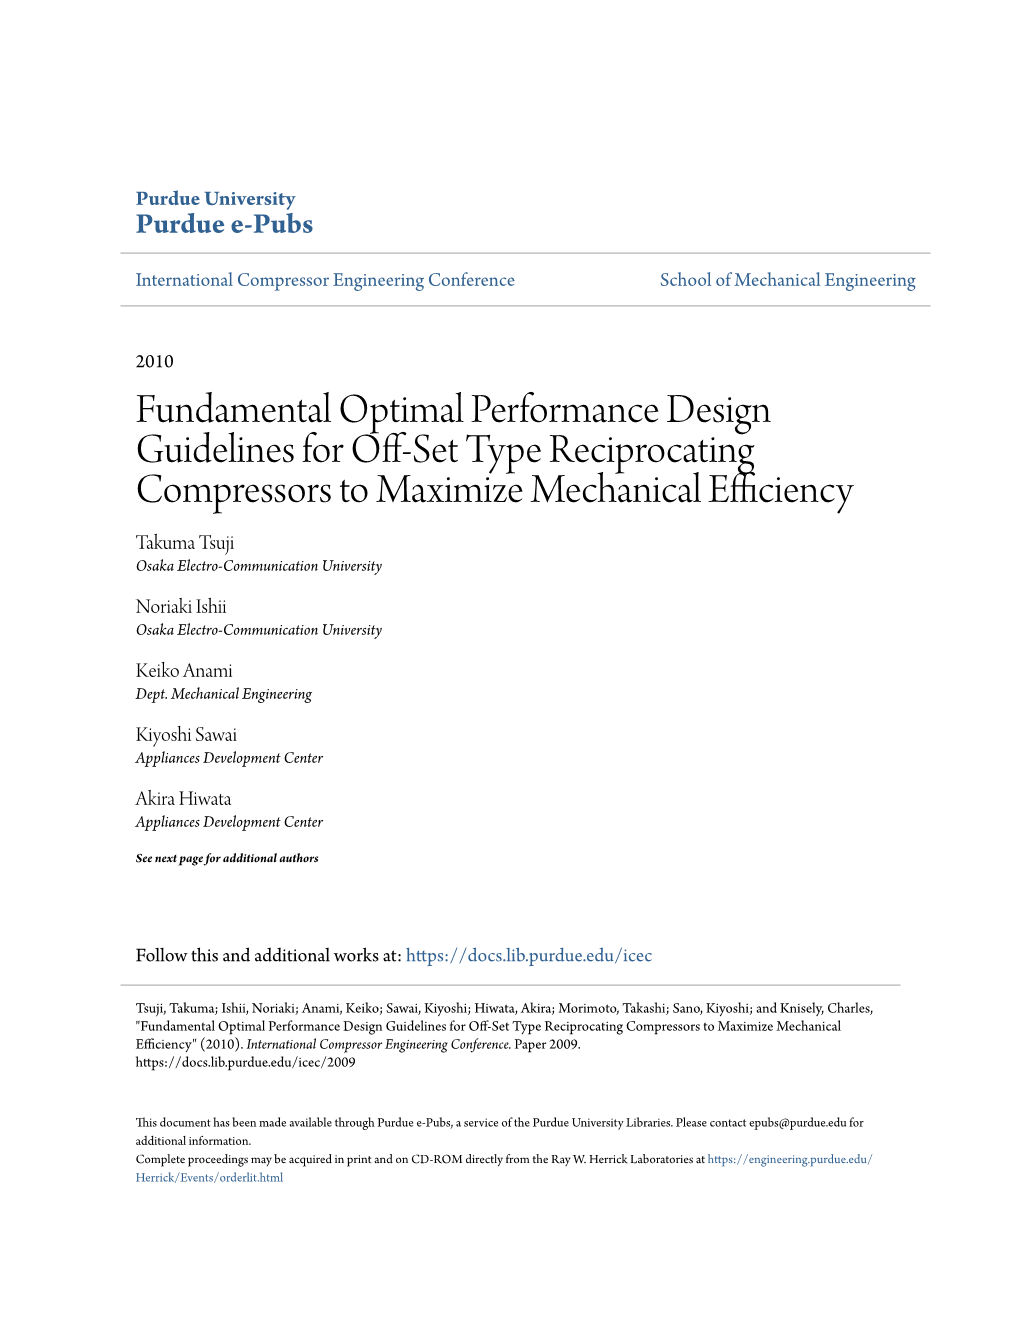 Fundamental Optimal Performance Design Guidelines for Off-Set Type